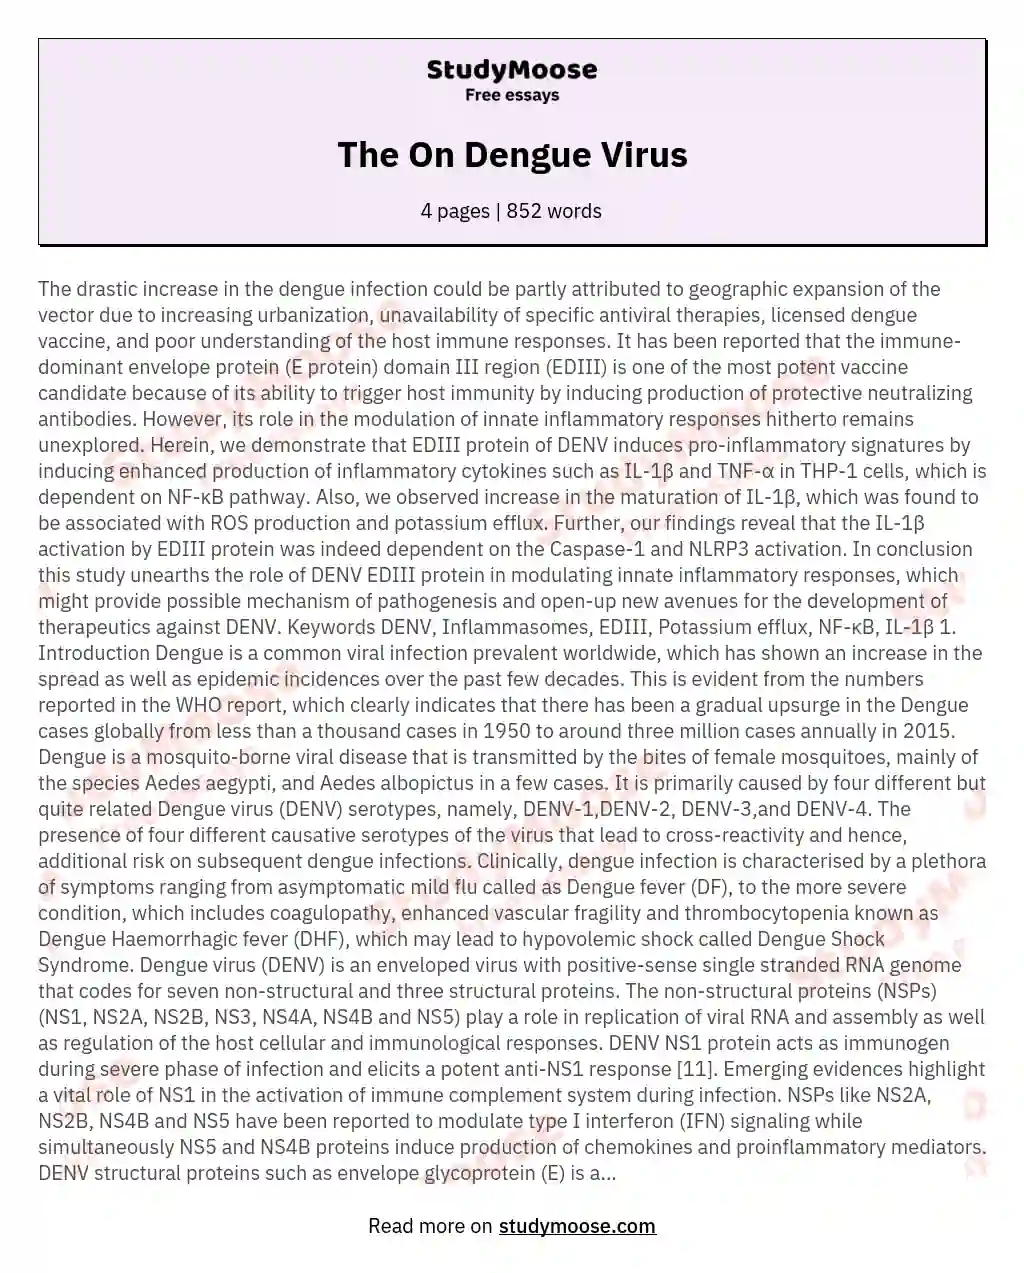 The On Dengue Virus essay